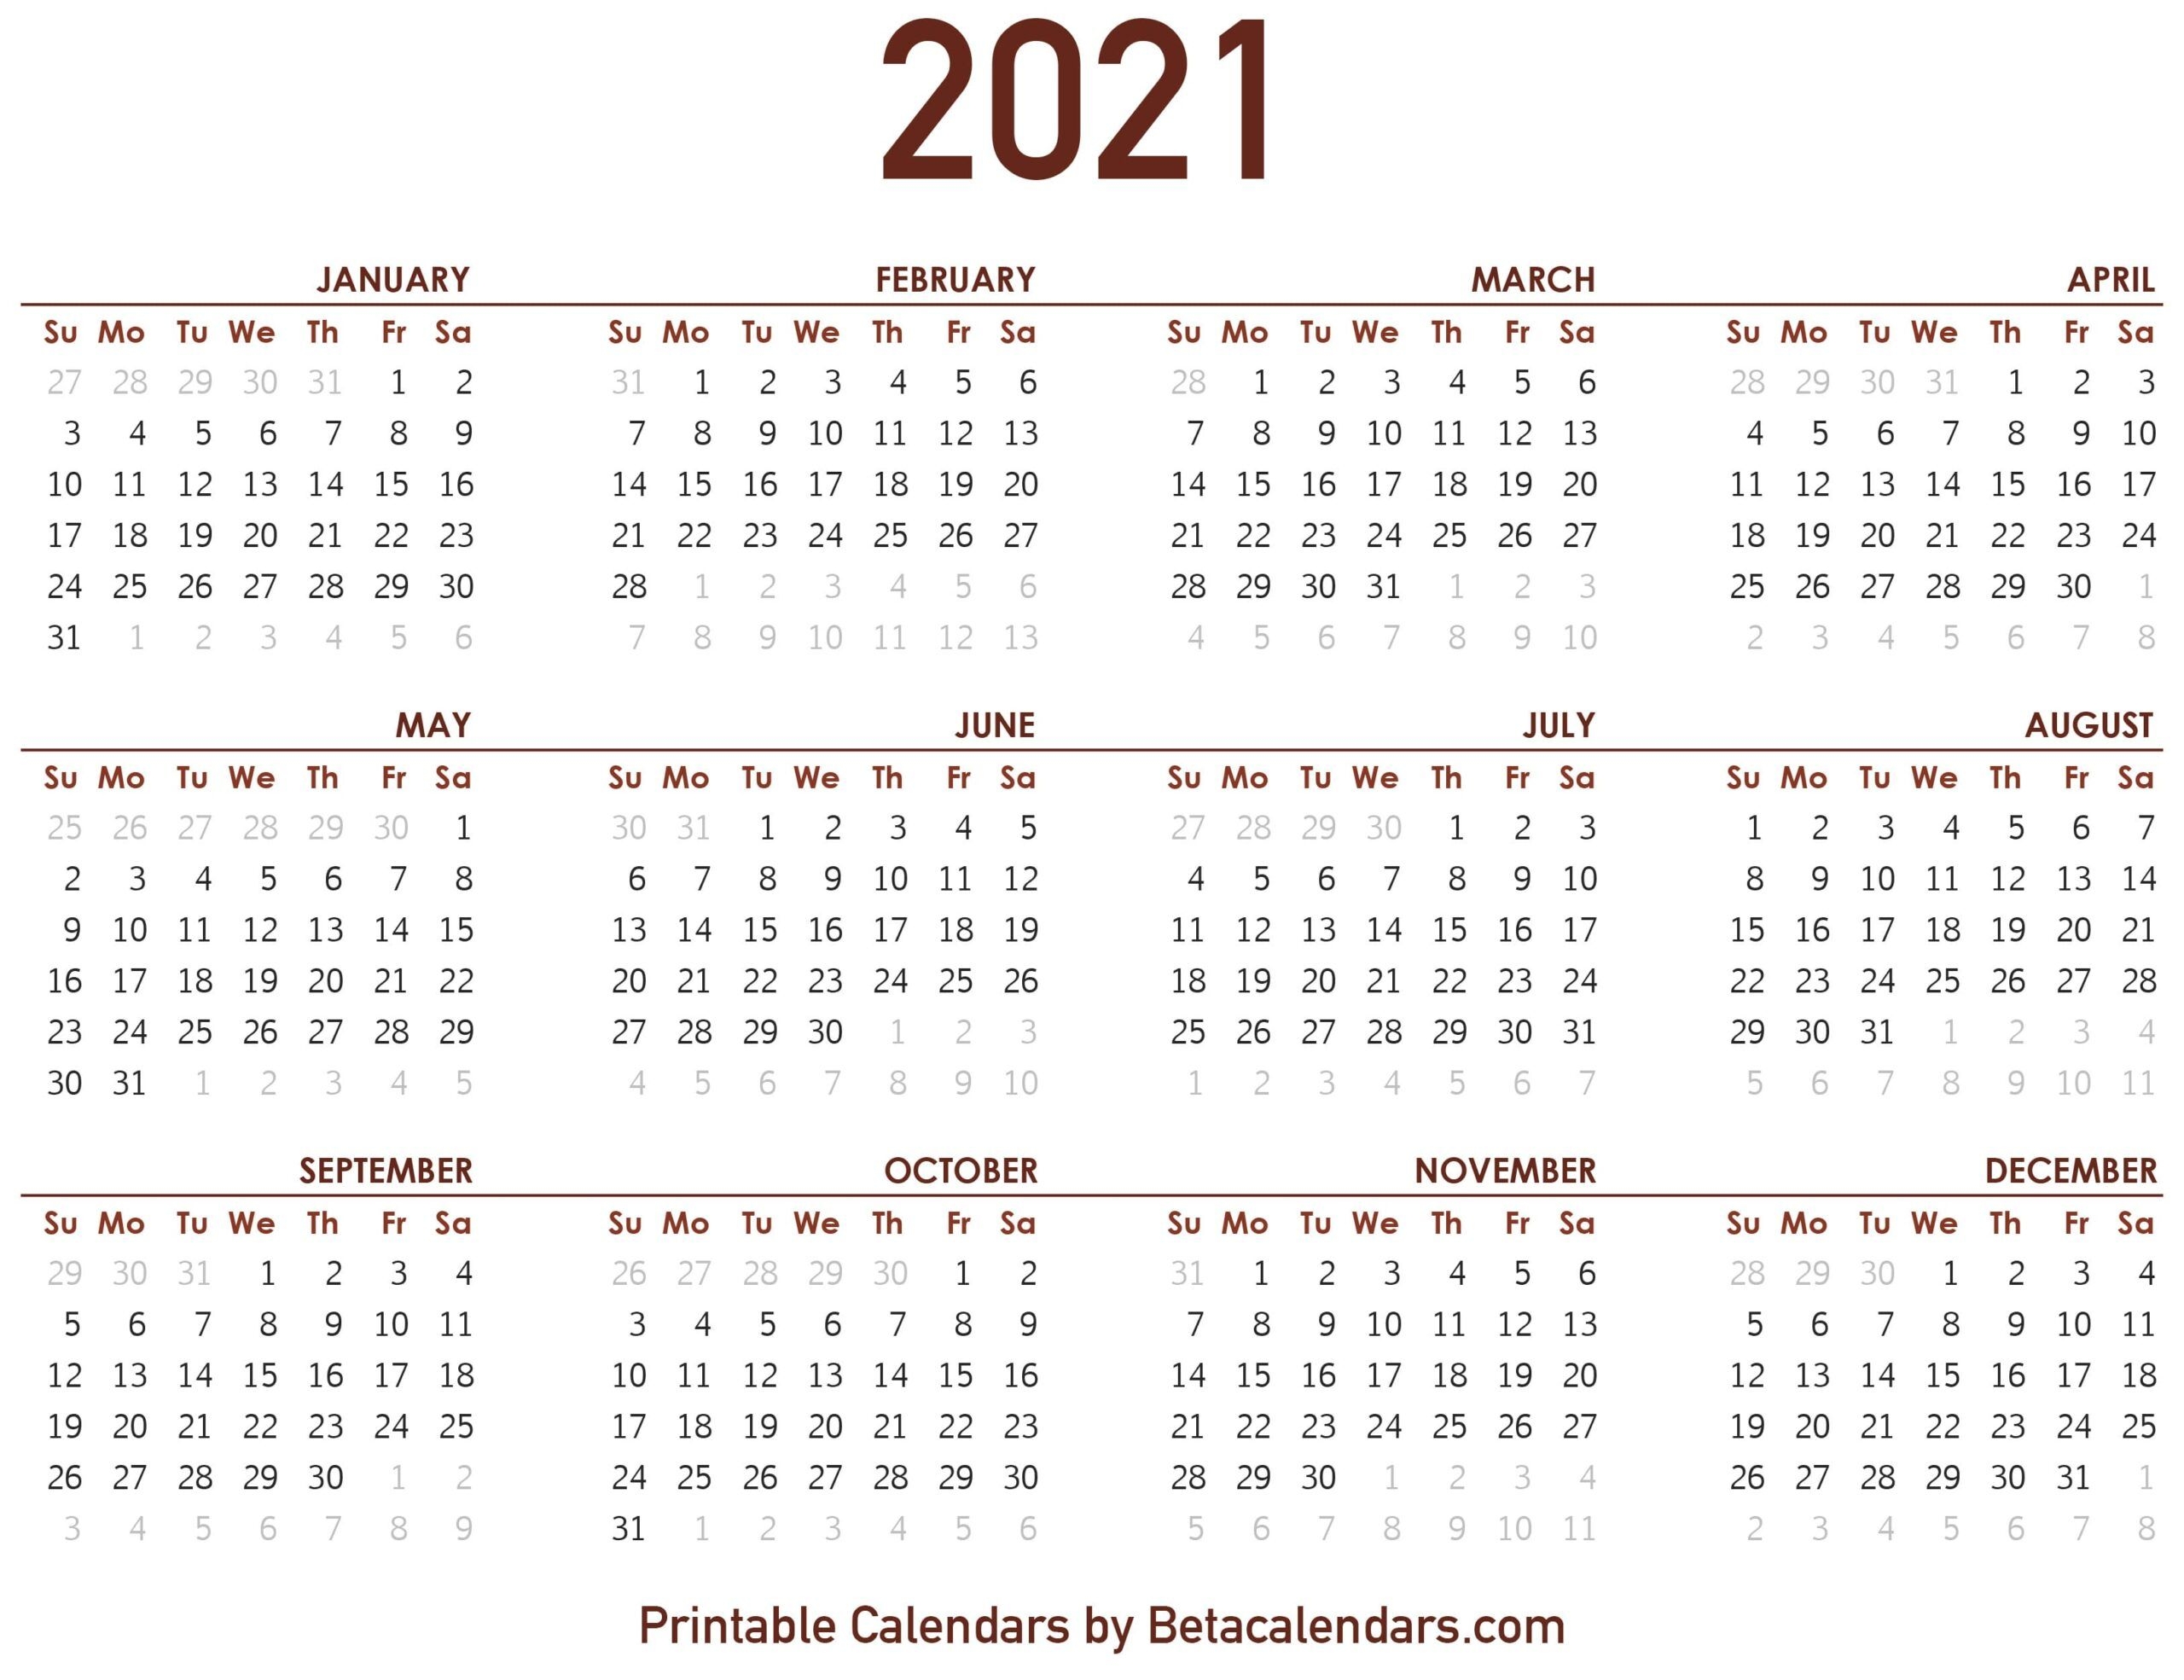 2021 calendar beta calendars